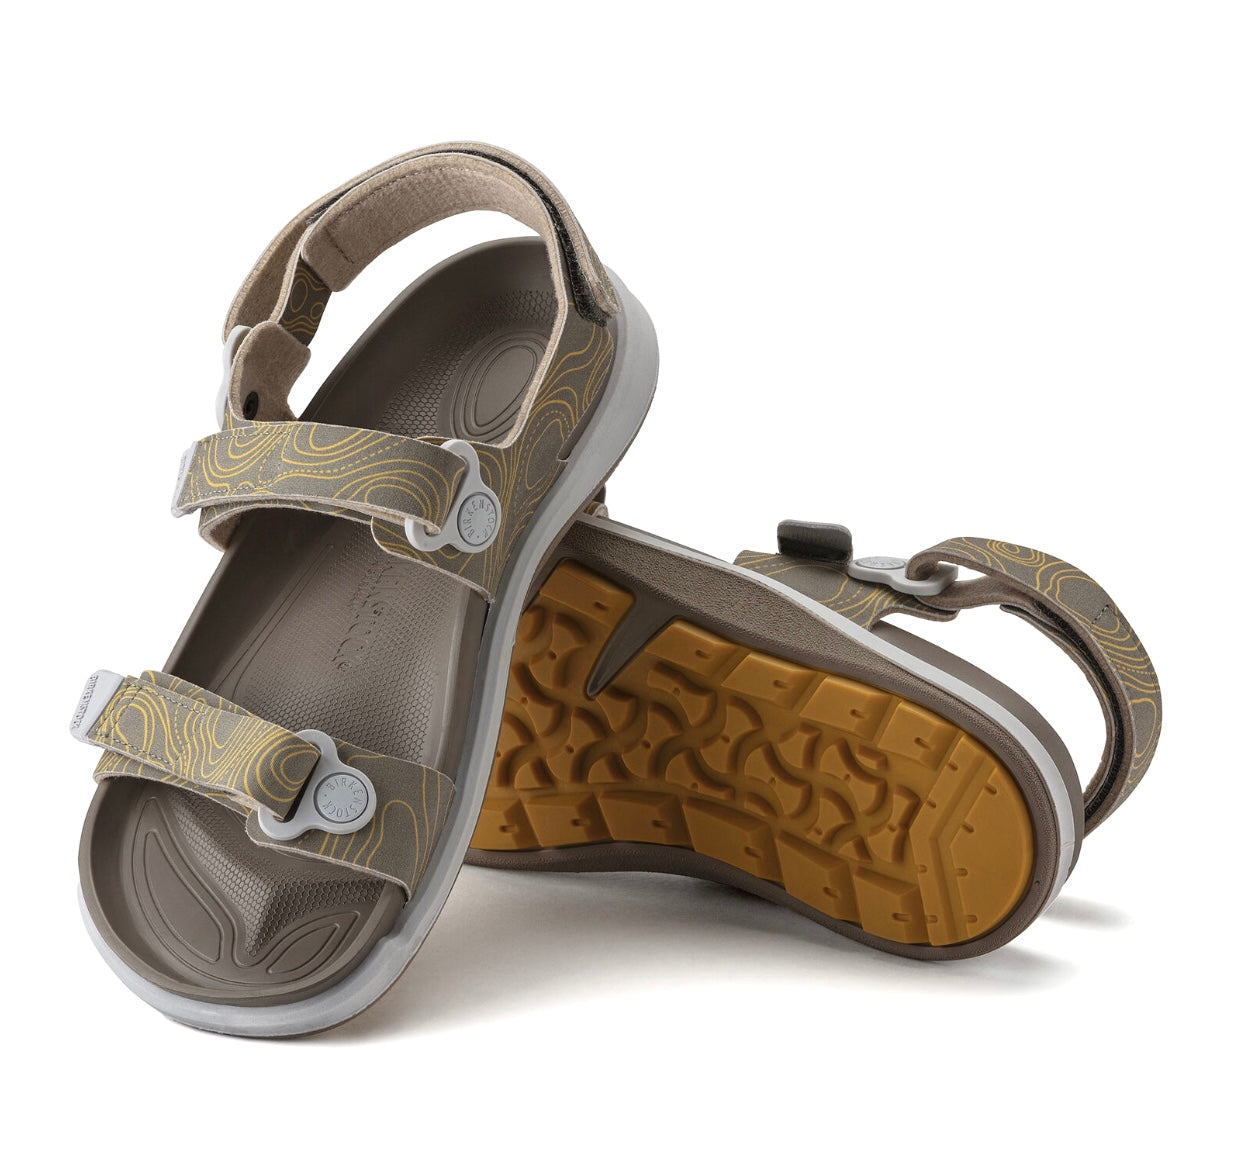 Birkenstock Kalahari Faded Khaki Velcro Vegan Sandal Made In Germany